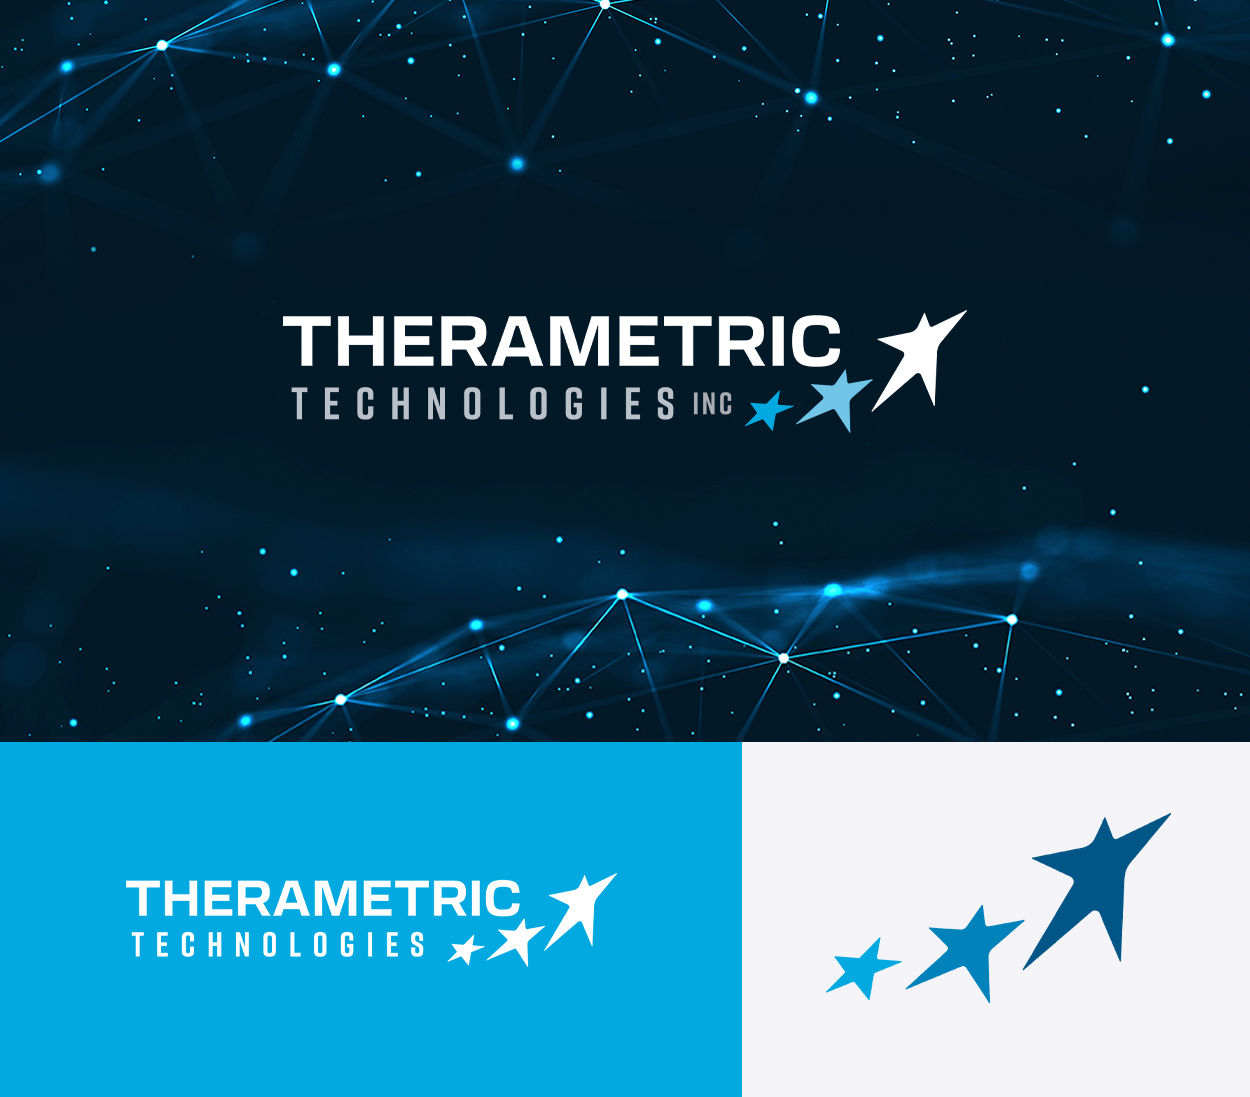 Therametric Technologies logo designs